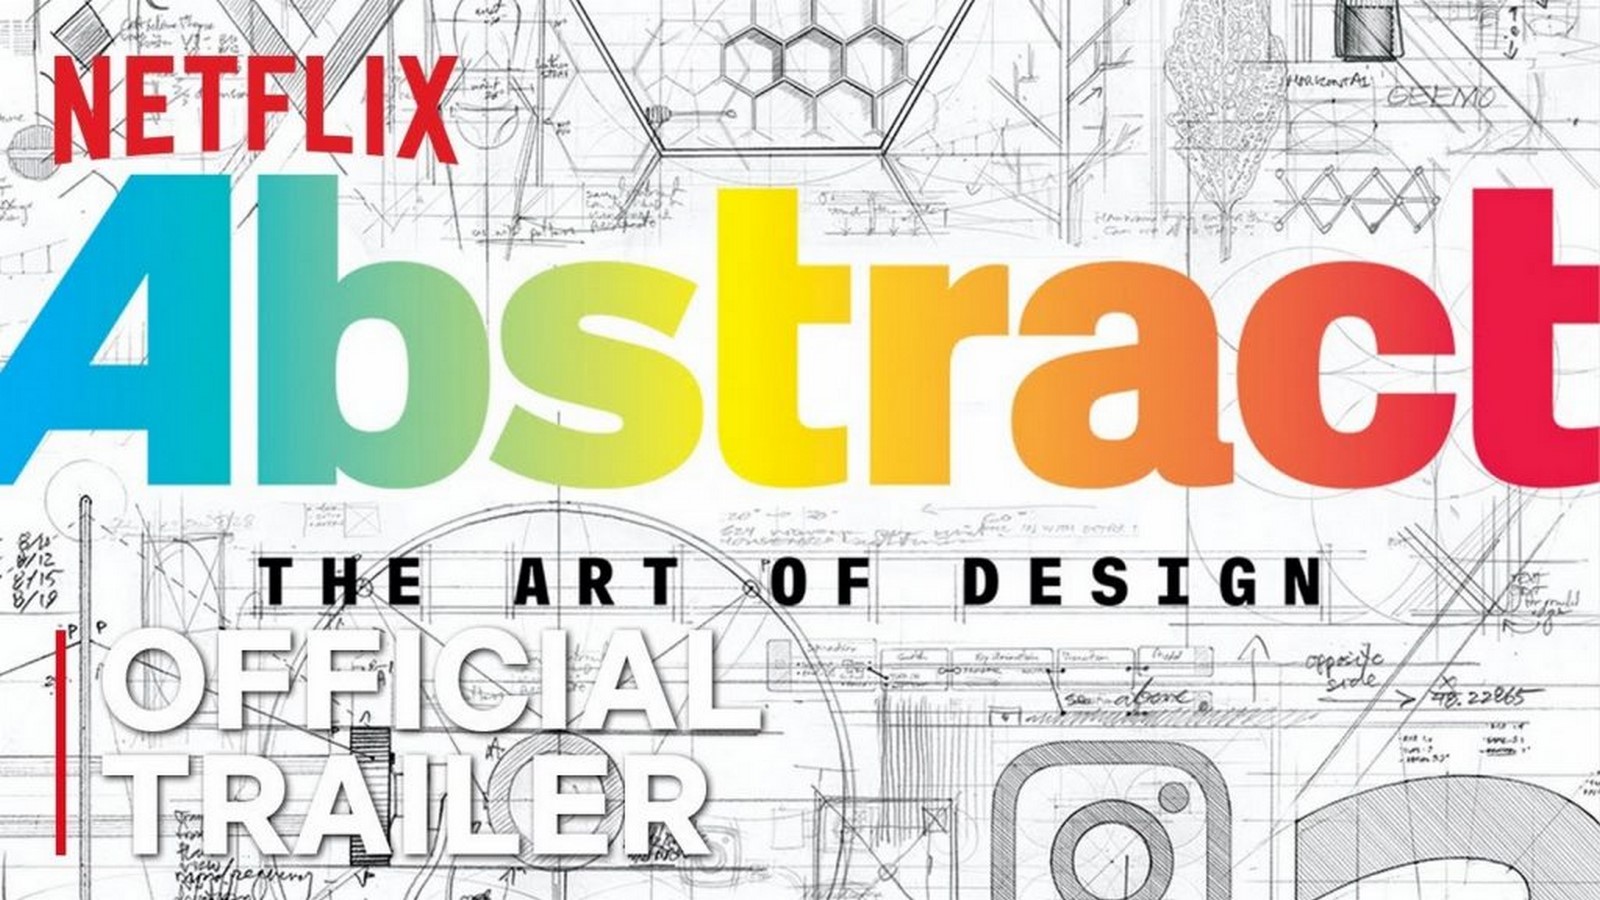 Abstract: The Art of Design (Abstraer: el arte del diseño)